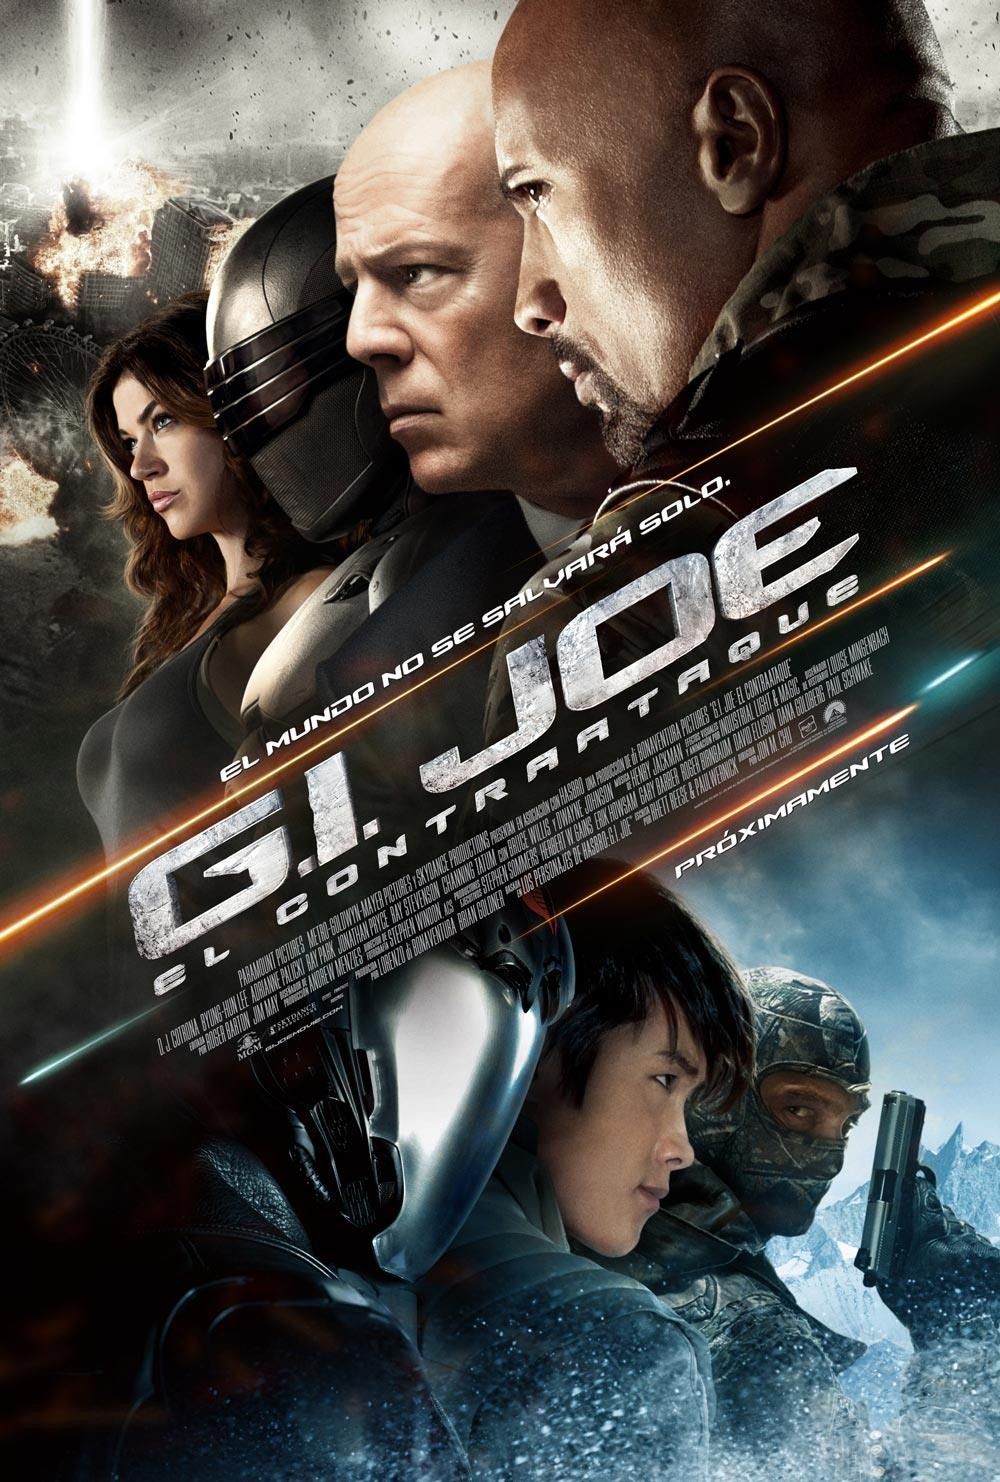 G.I. Joe Movie Poster Wallpapers Wallpaper Cave